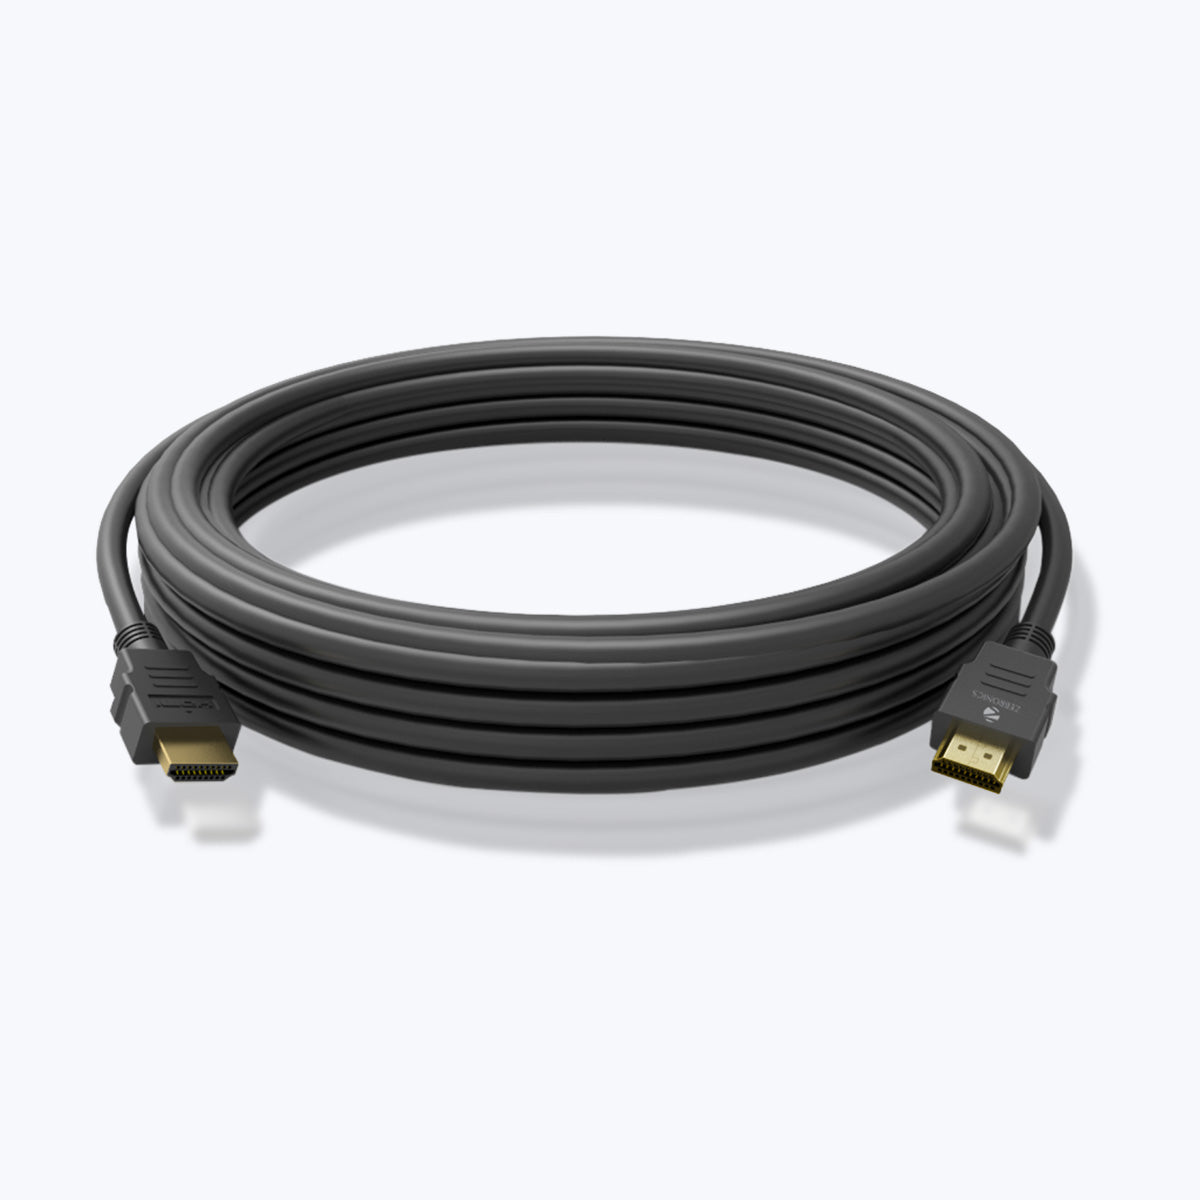 ZEB-HAA5020 (5 Meter) - HDMI Cable - Zebronics